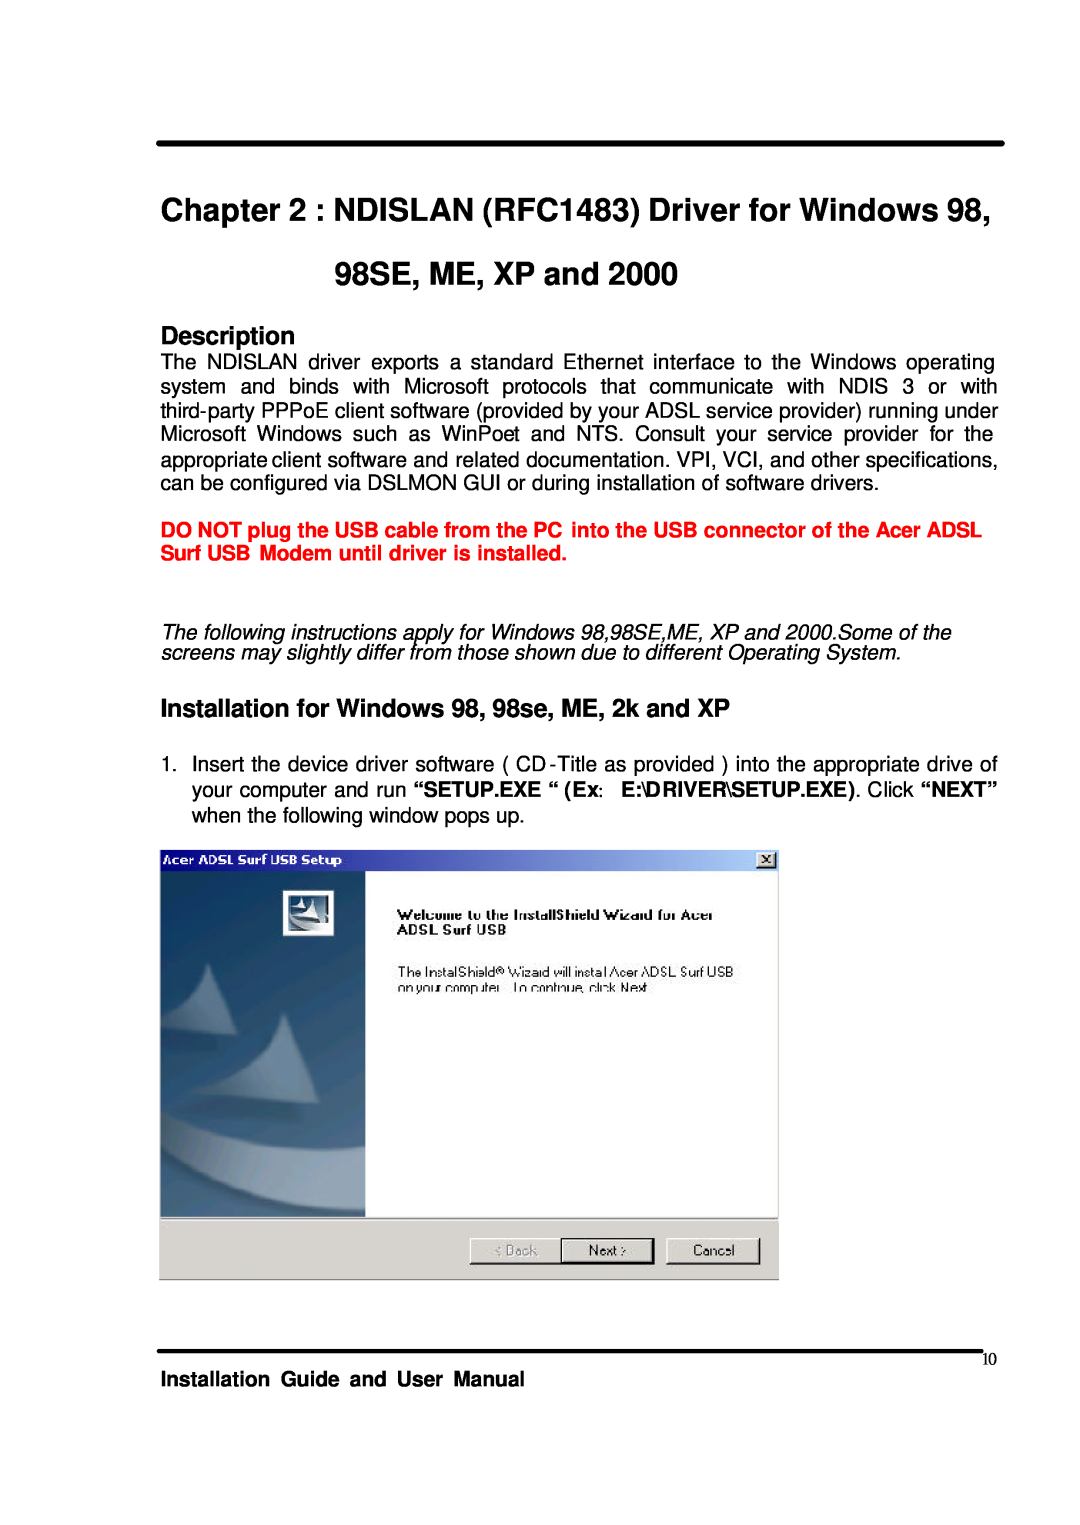 Acer ADSL Surf USB Modem user manual NDISLAN RFC1483 Driver for Windows 98SE, ME, XP and, Description 